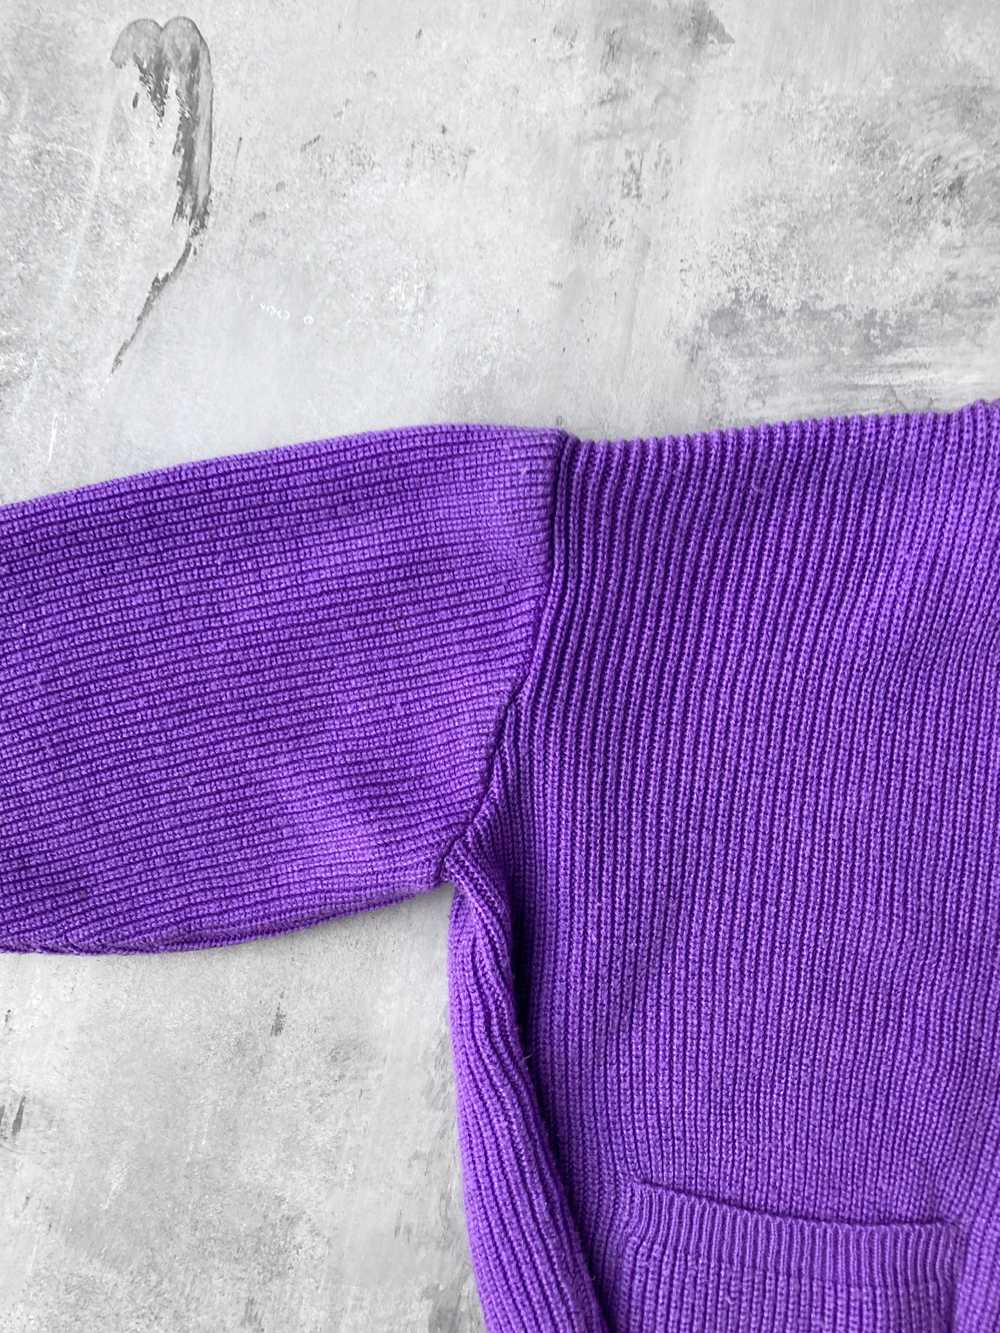 Cropped Purple Cardigan 90's - Large - image 3